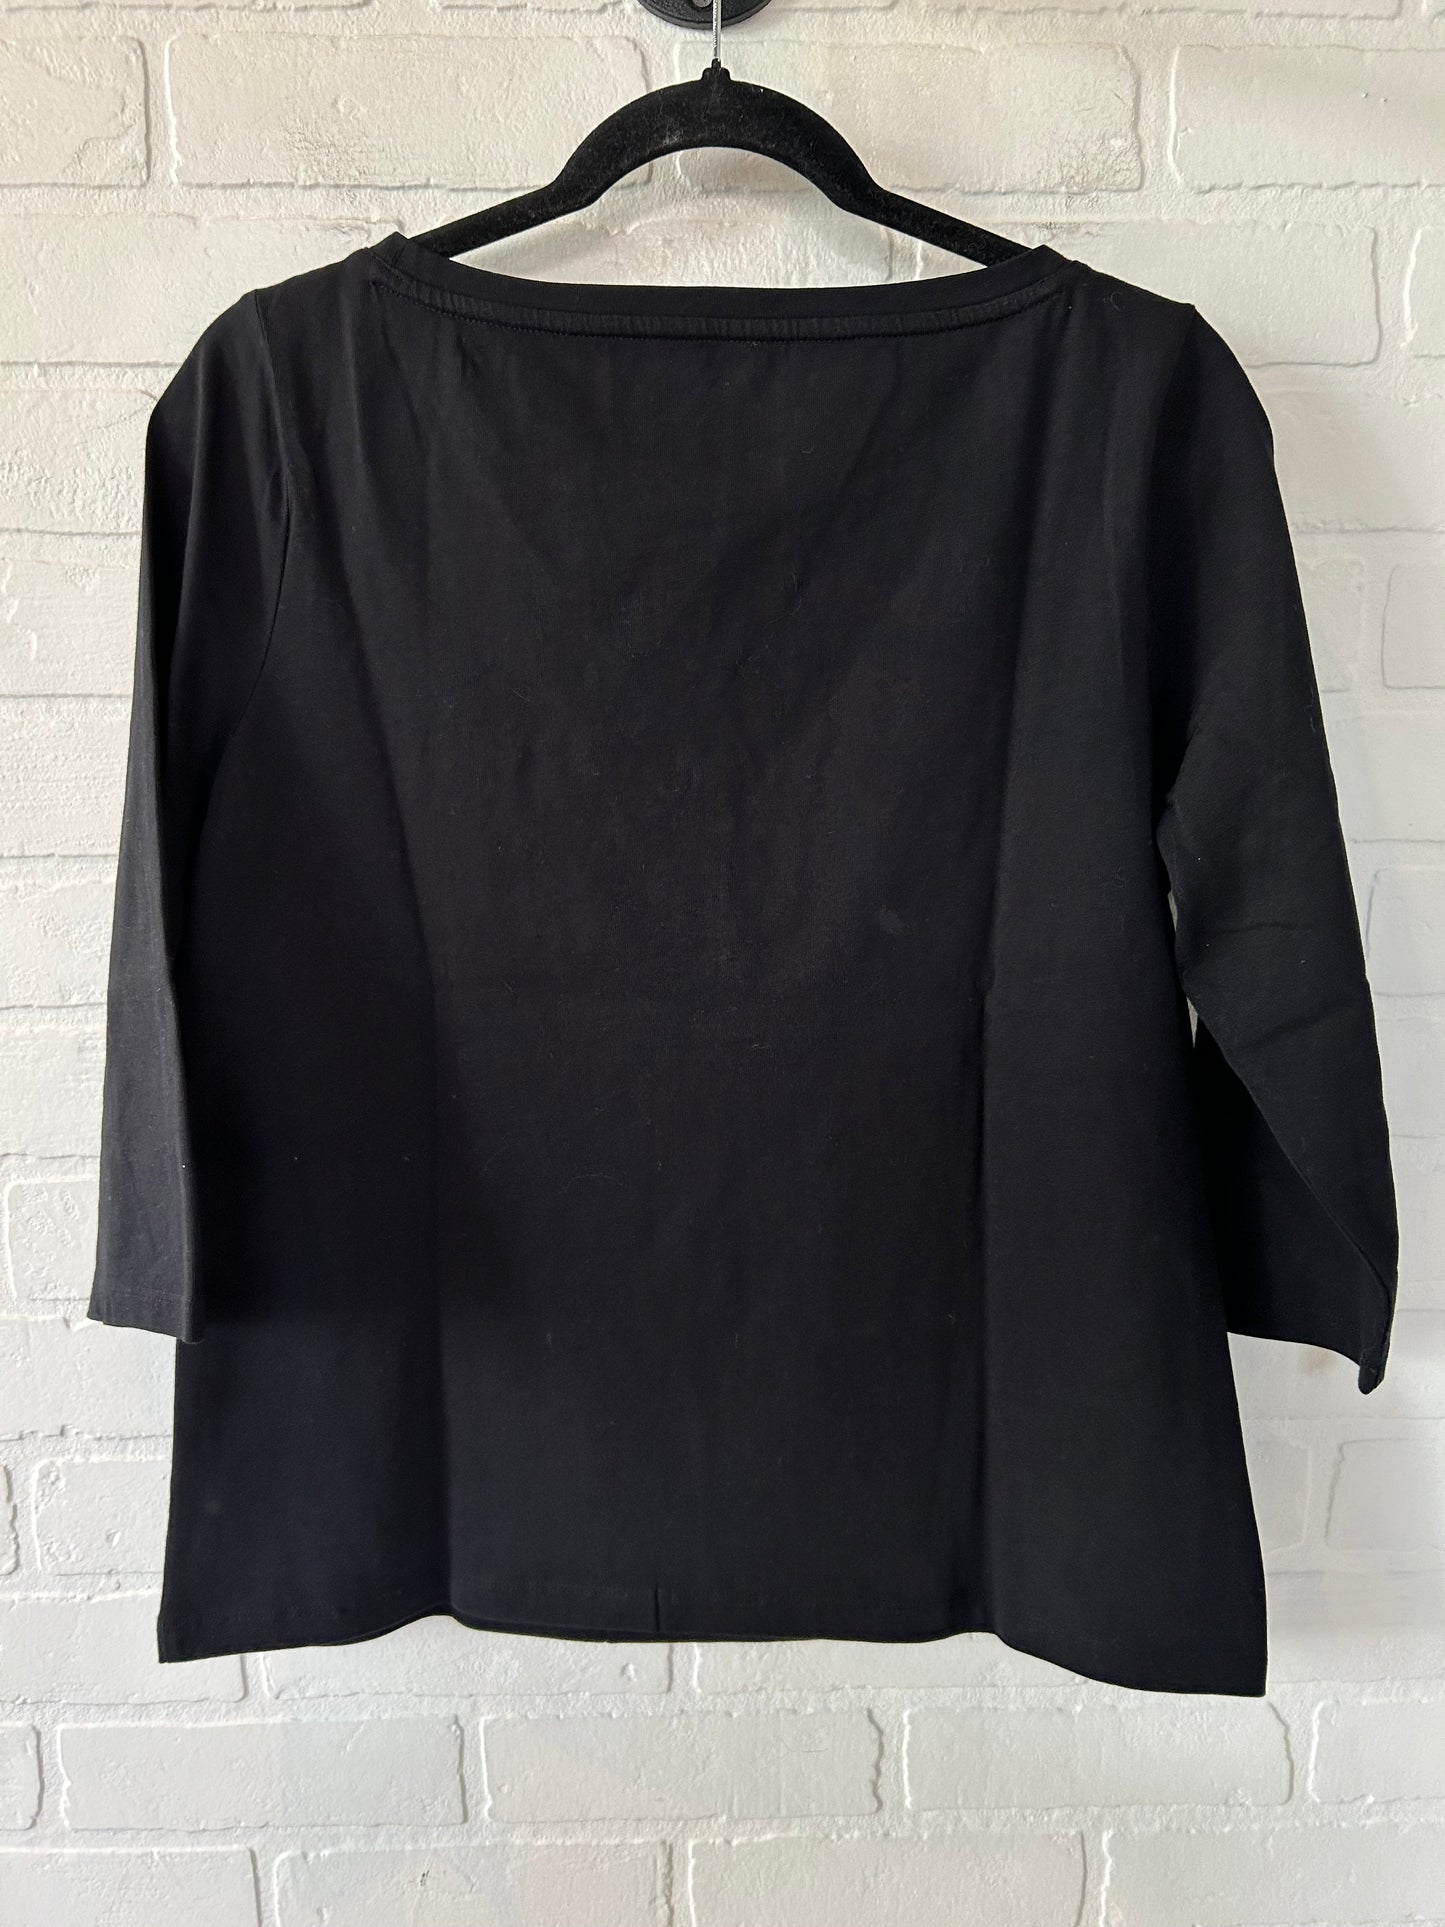 Black Top 3/4 Sleeve Basic Talbots, Size M